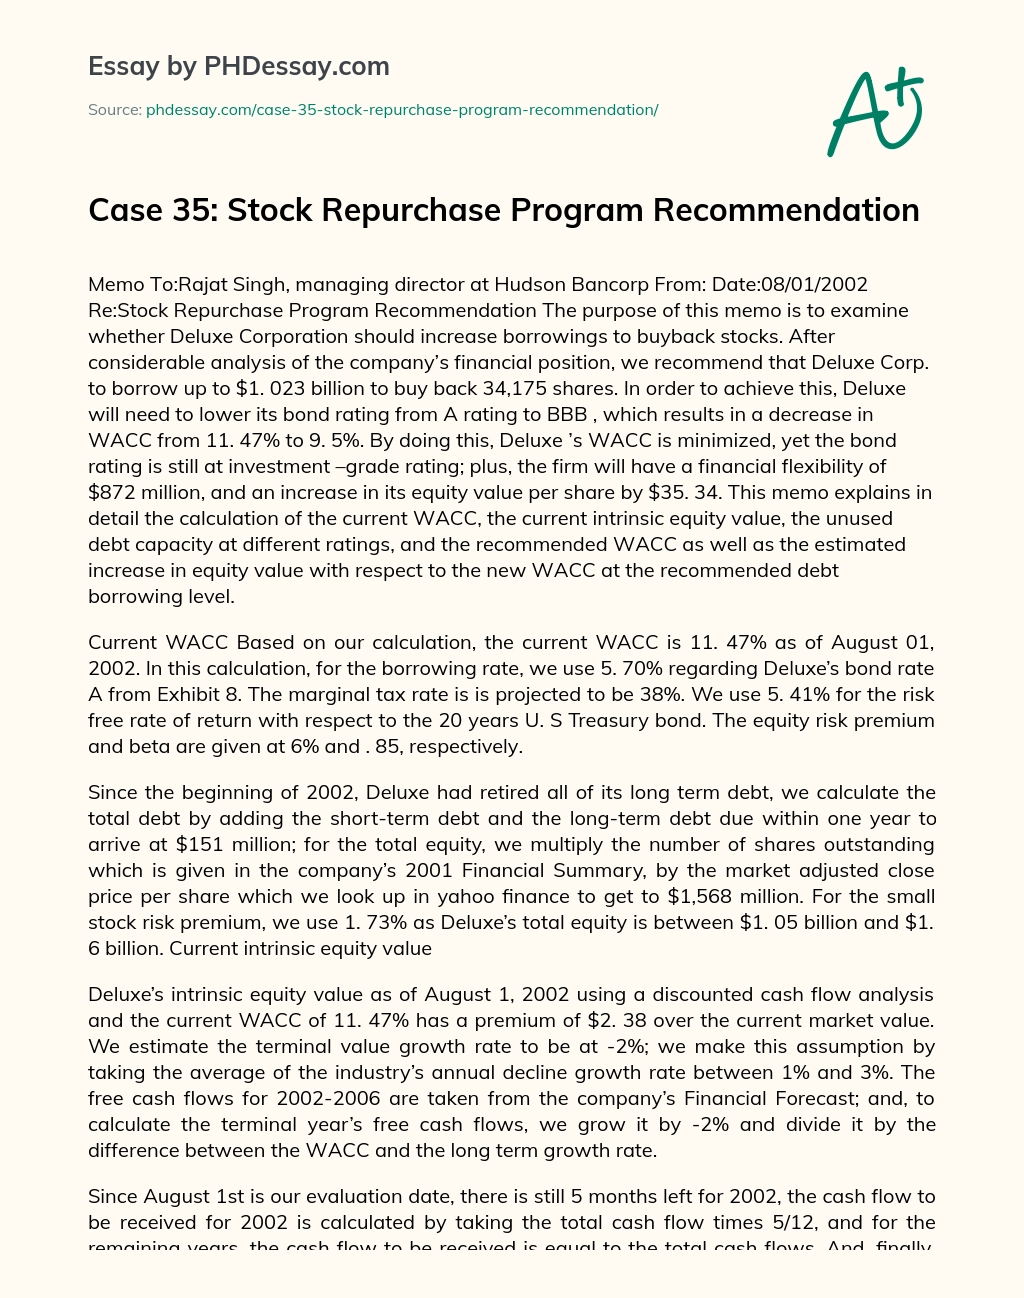 Case 35: Stock Repurchase Program Recommendation essay